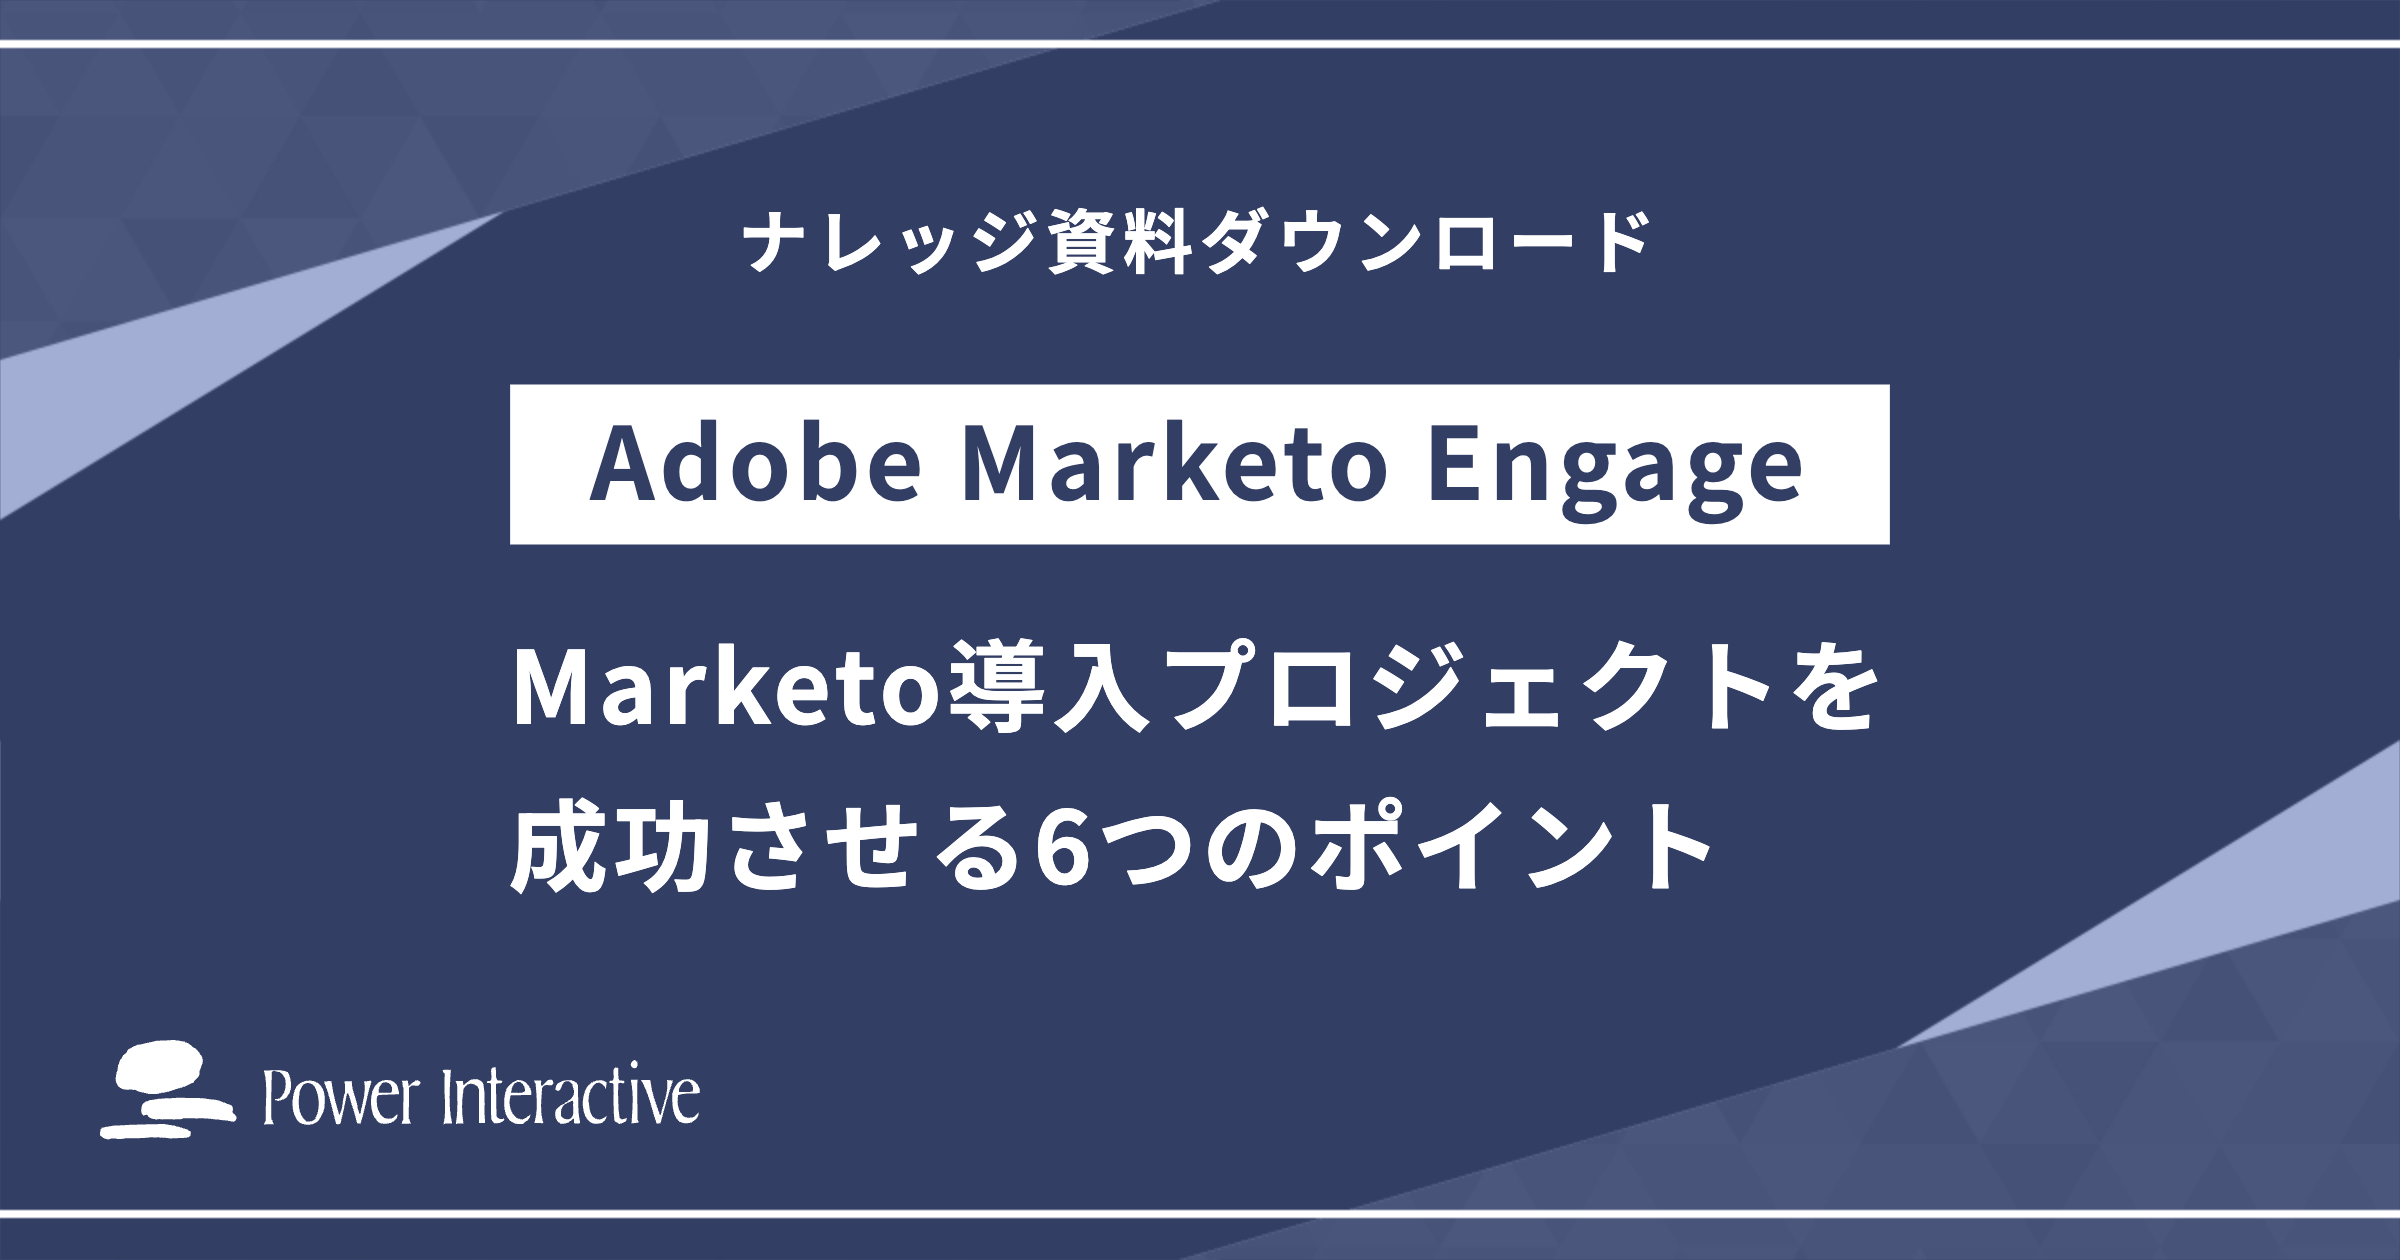 Adobe Marketo Engage⽀援サービス